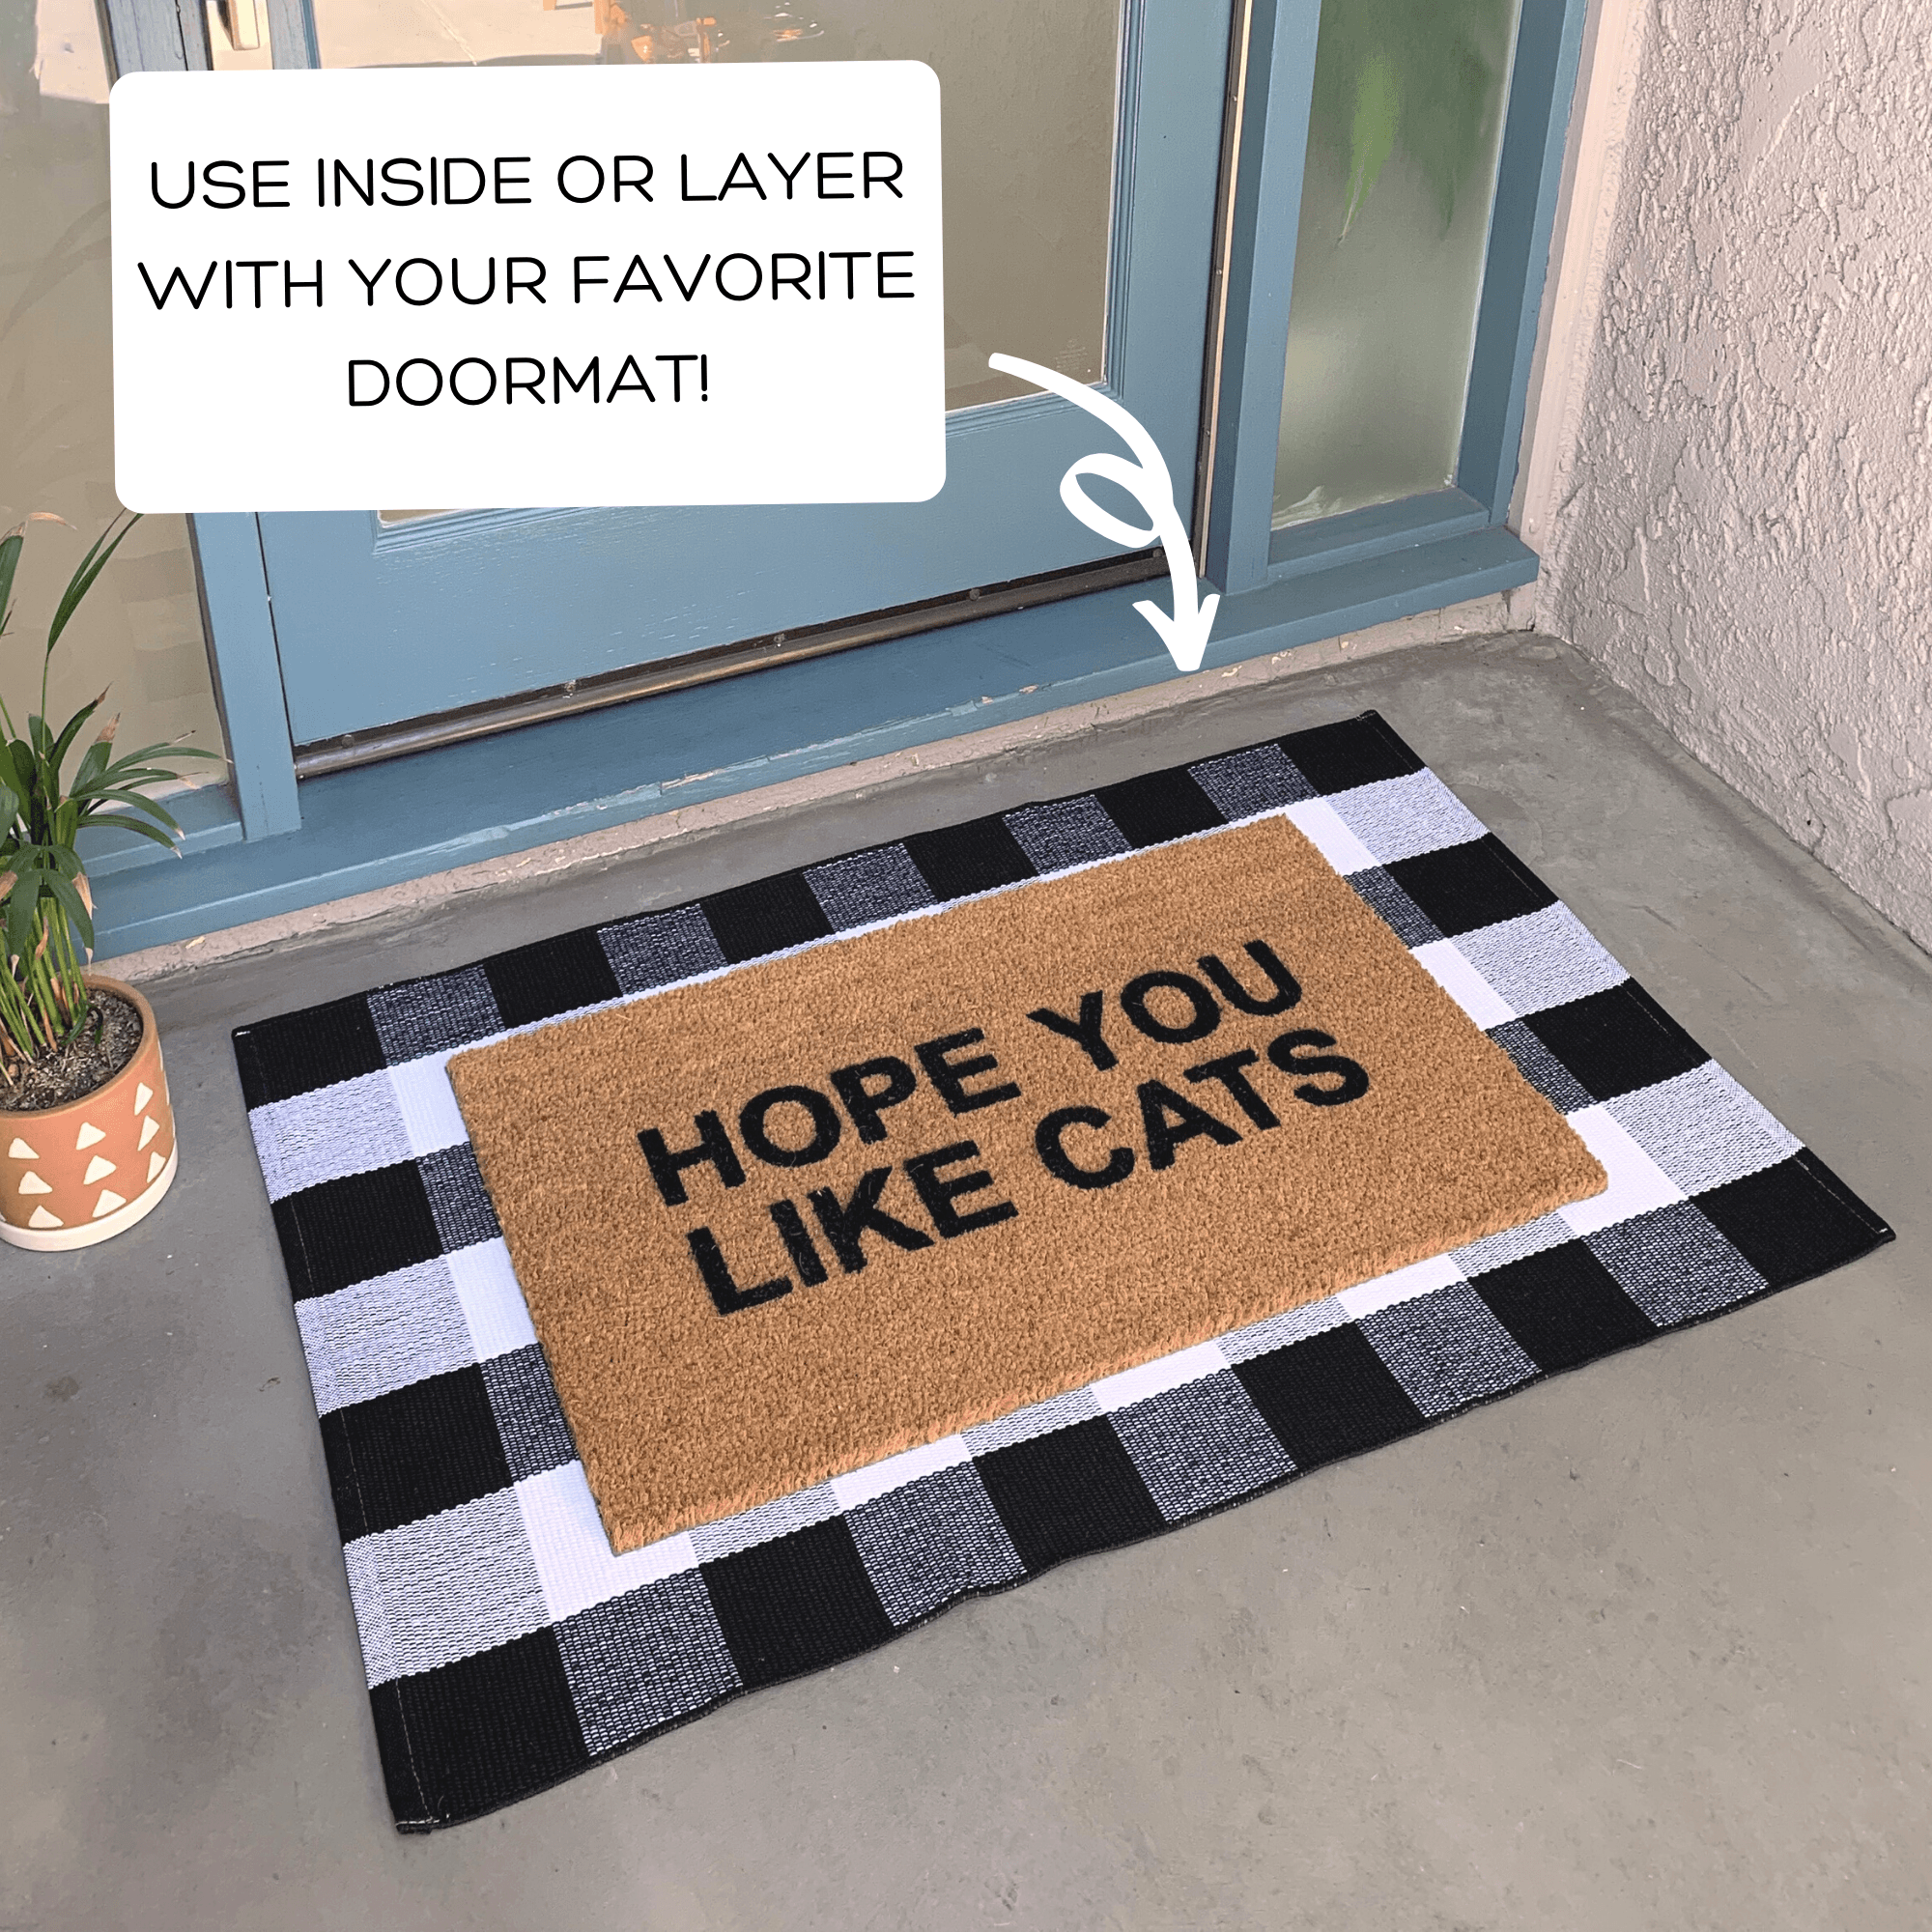 Extra Large Outdoor Rug, Carpet Extra Large, Entrance Carpet, Doormat Rug